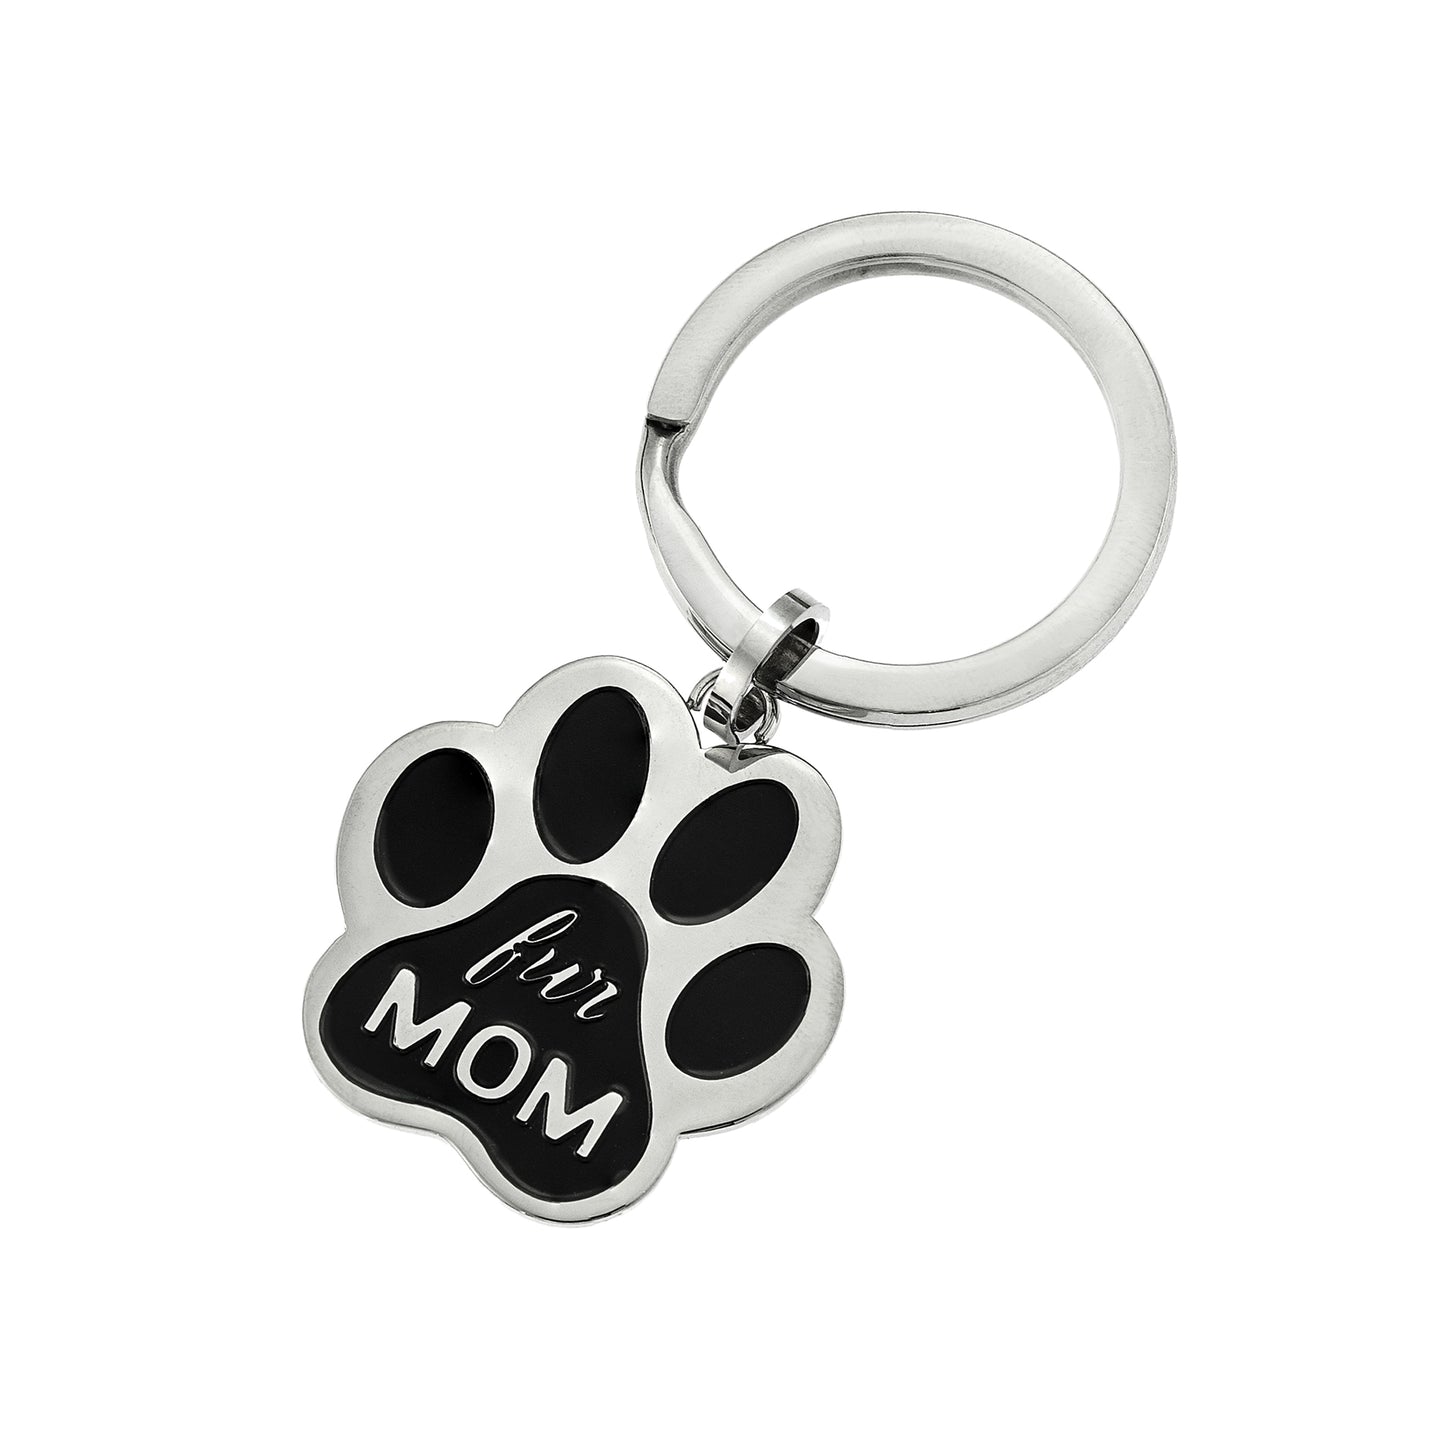 Fur Mom Paw Print Keyring - Stainless Steel Pet Memorial Keychain Gift